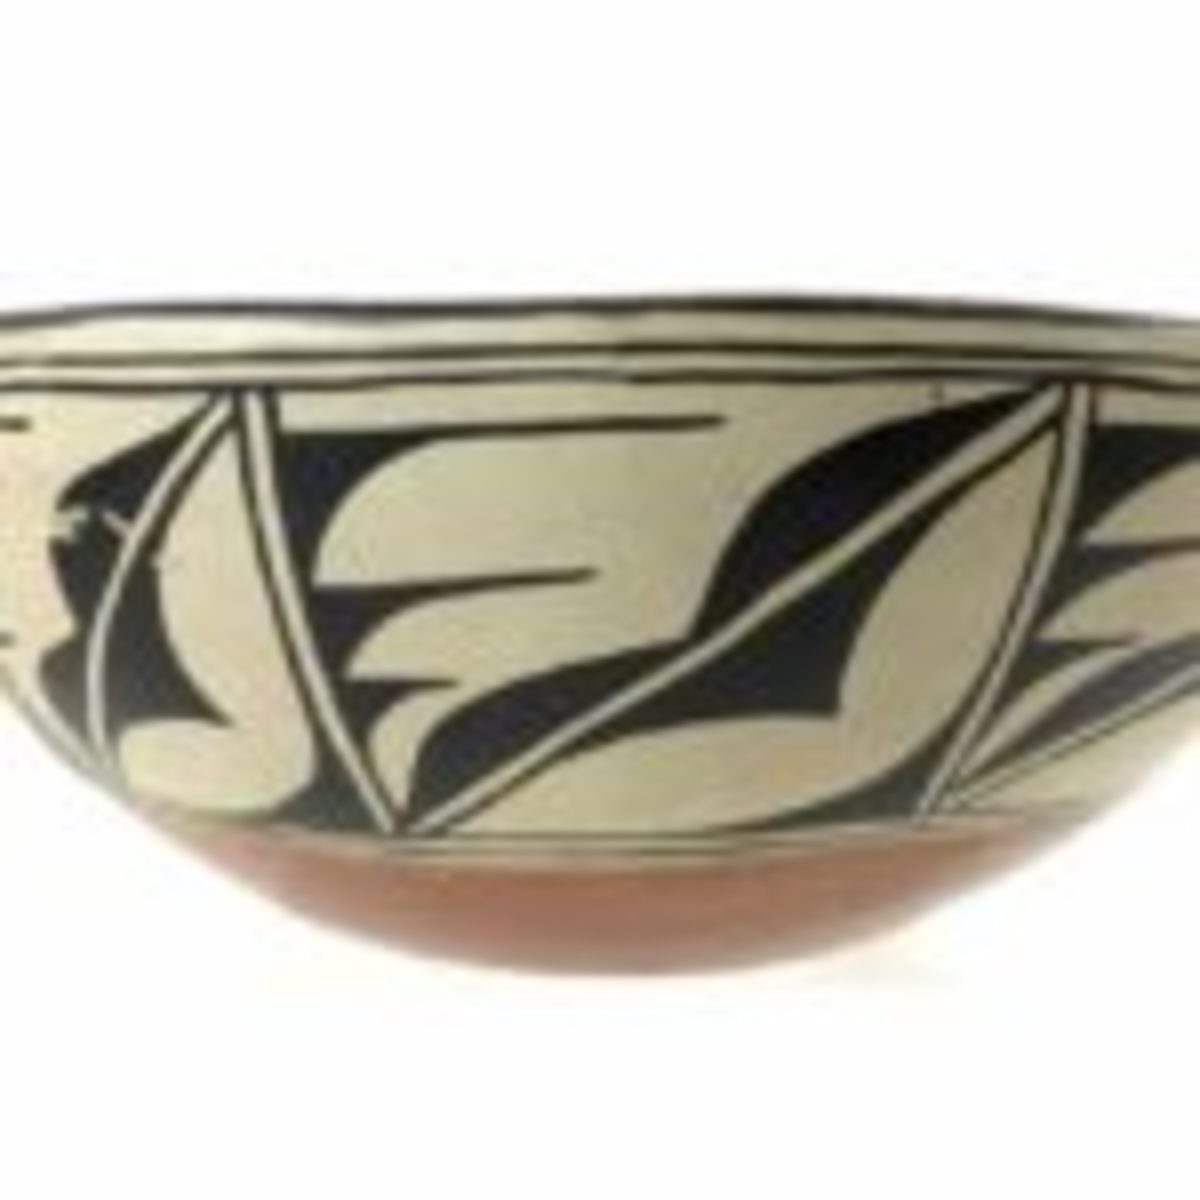 Santo Domingo low pottery bowl.